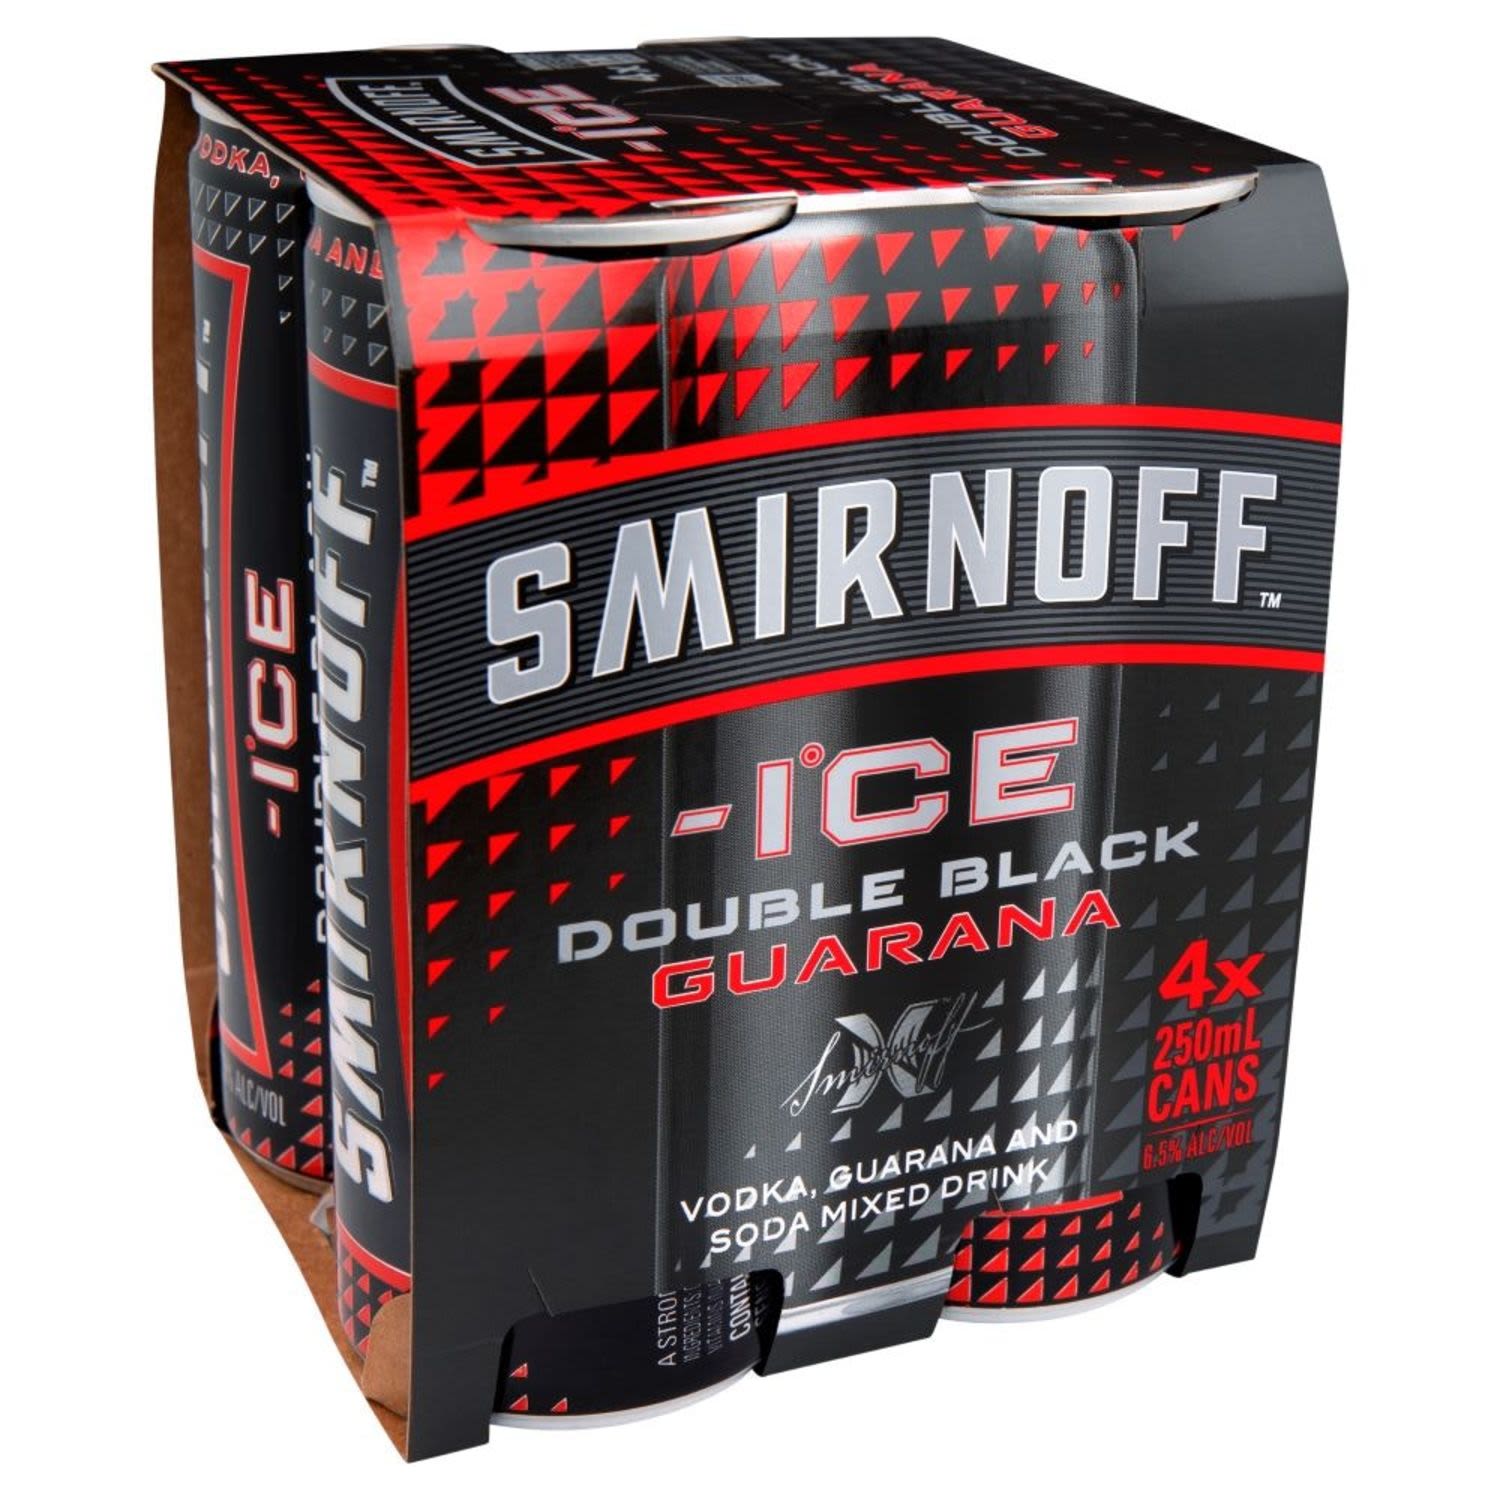 Smirnoff Ice Double Black & Guarana 6.5% Can 250mL 4 Pack